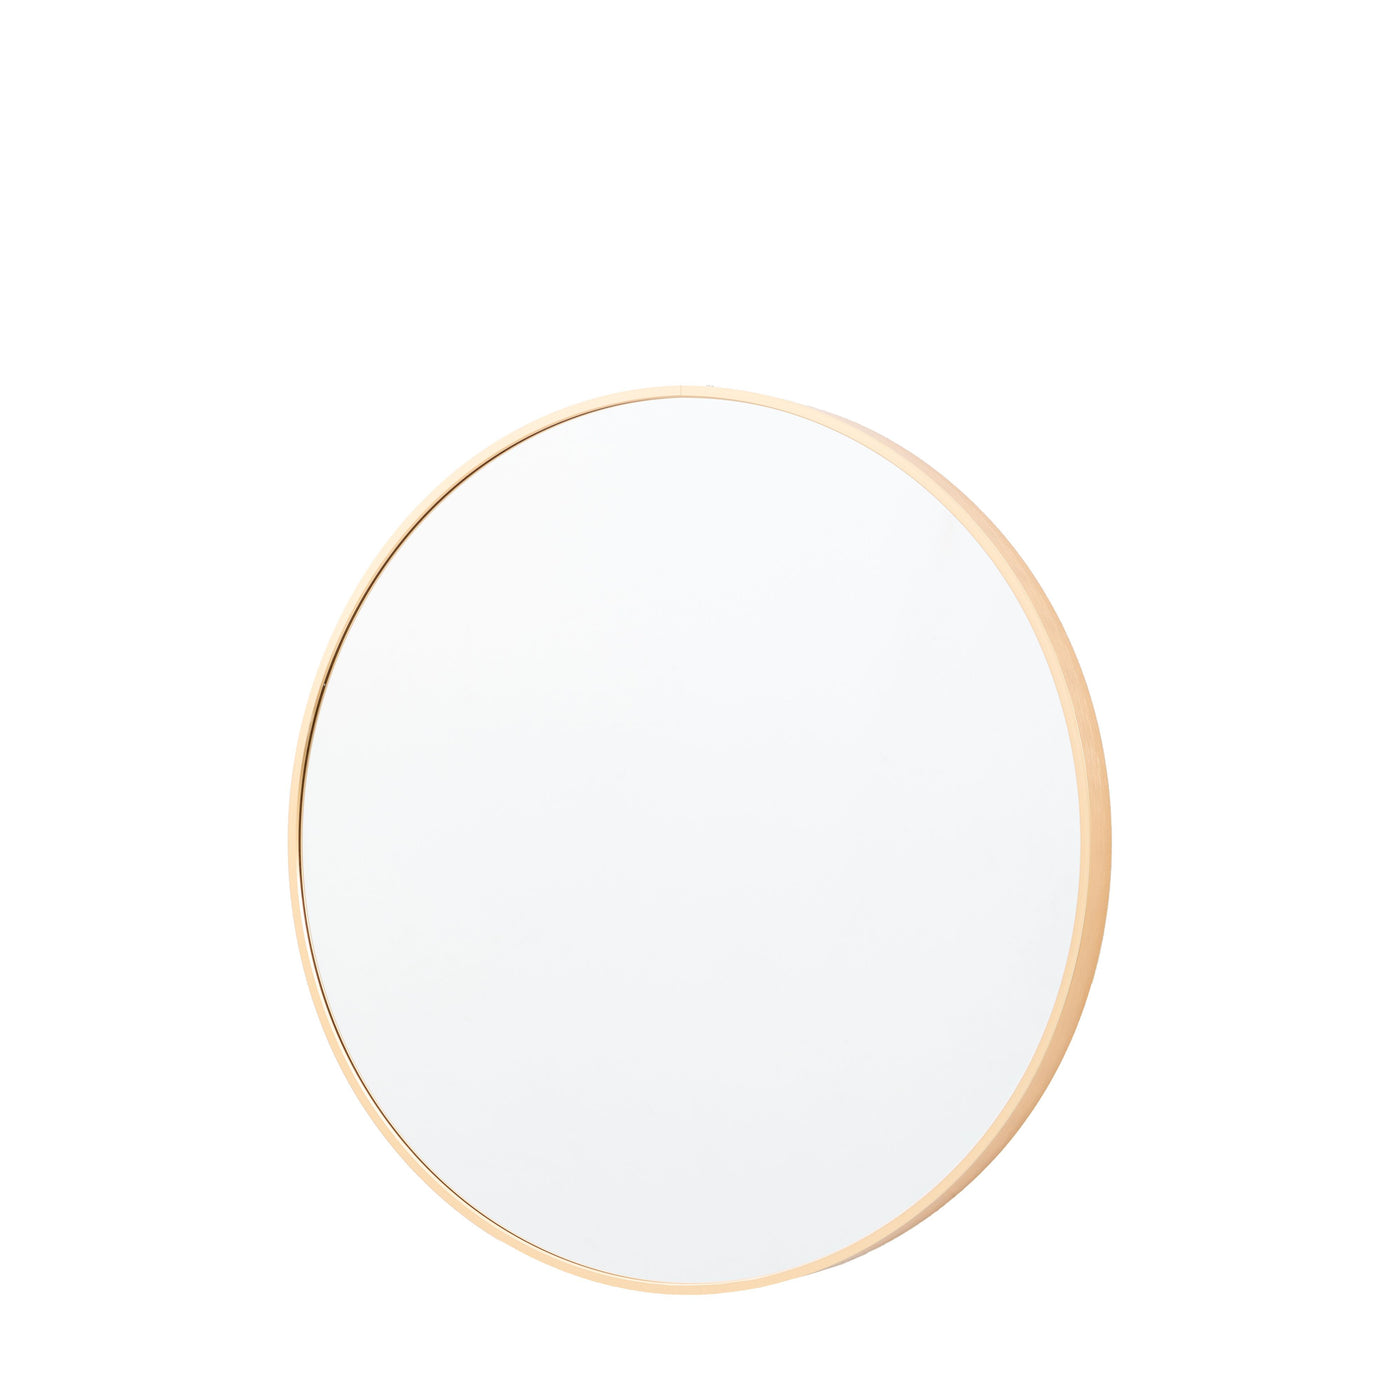 Boswyn Mirror Round - gold